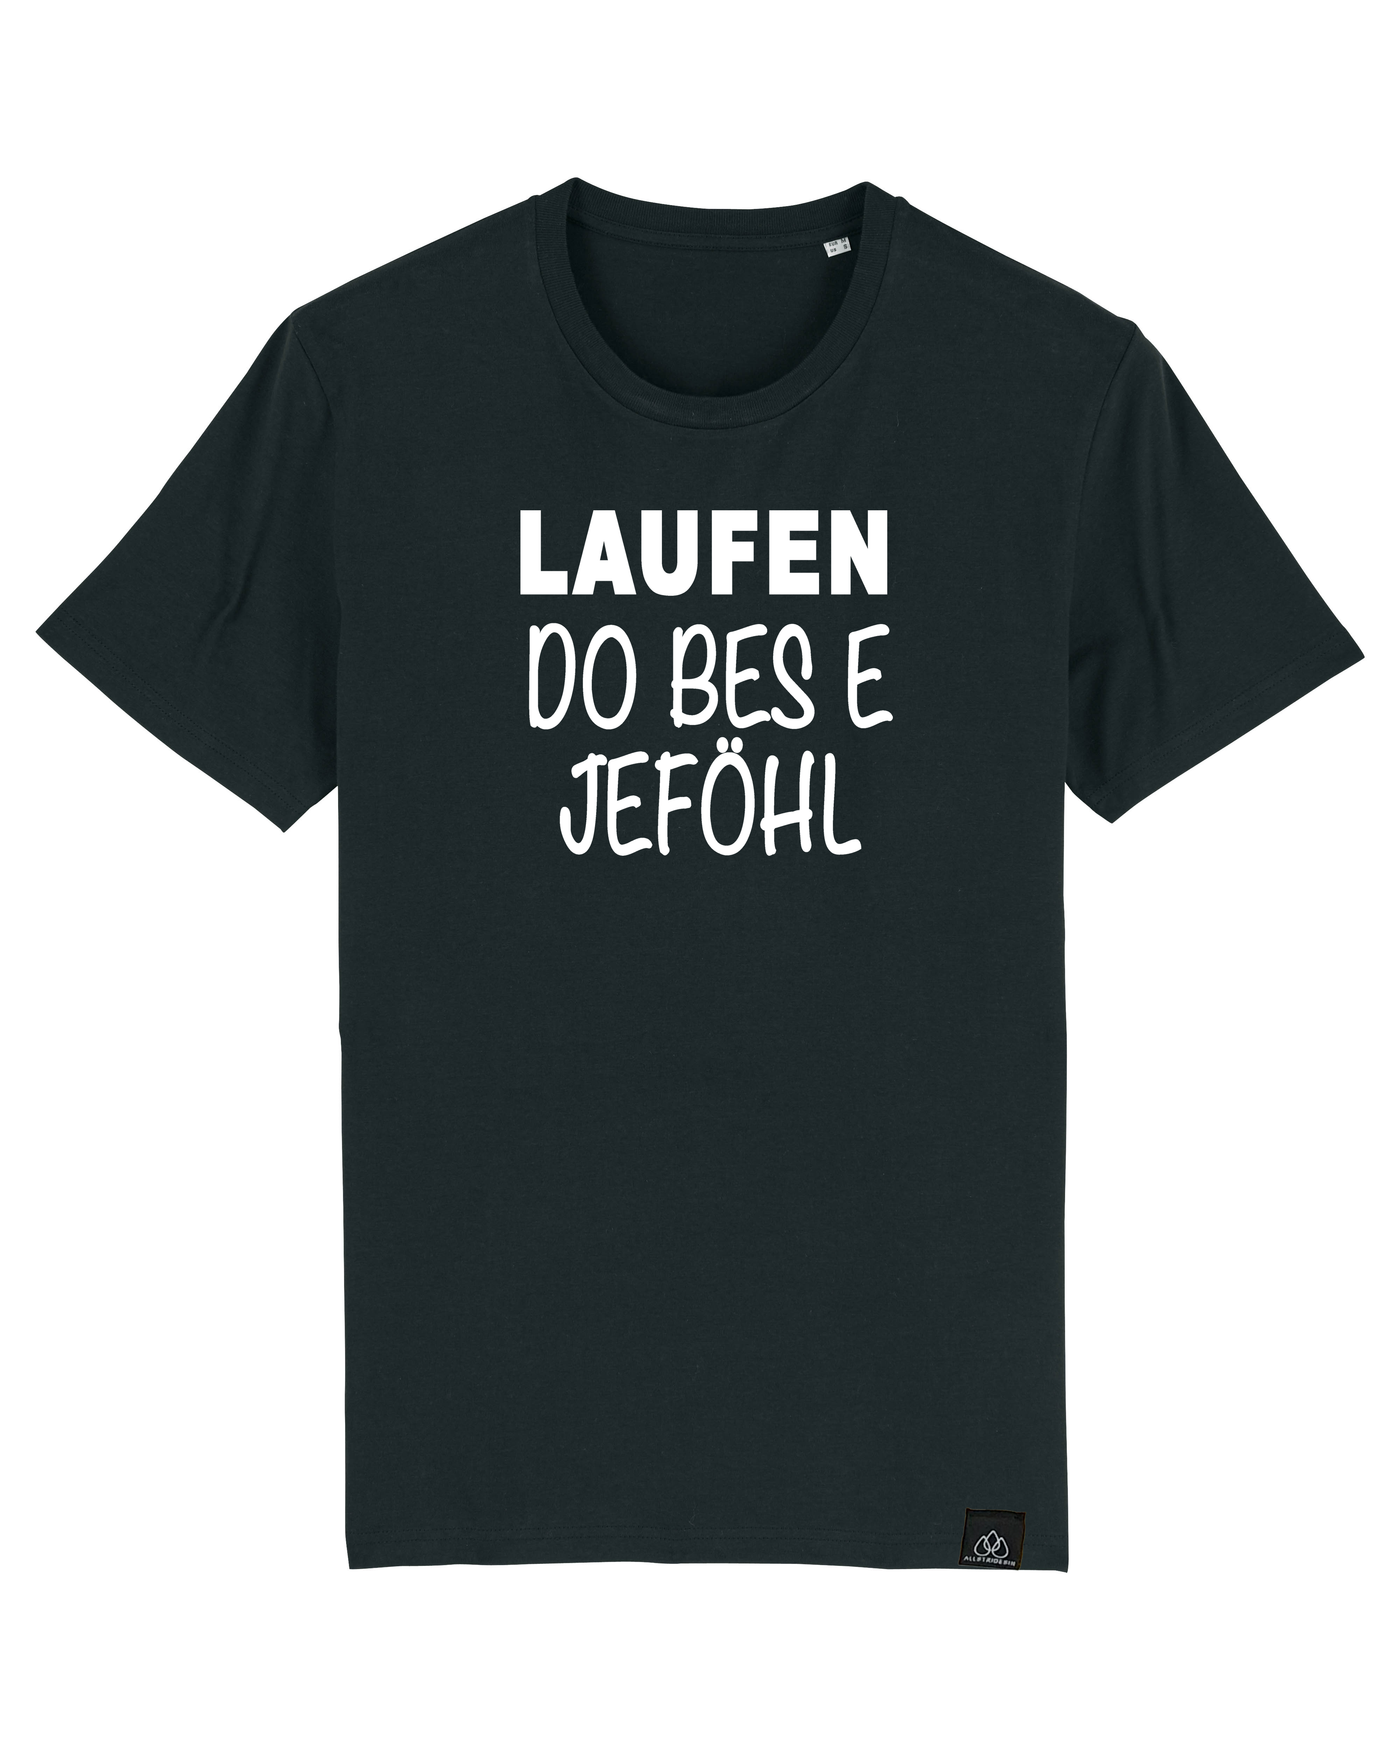 Laufen do bes e Jeföhl Iconic Unisex T-Shirt ALLSTRIDESIN®